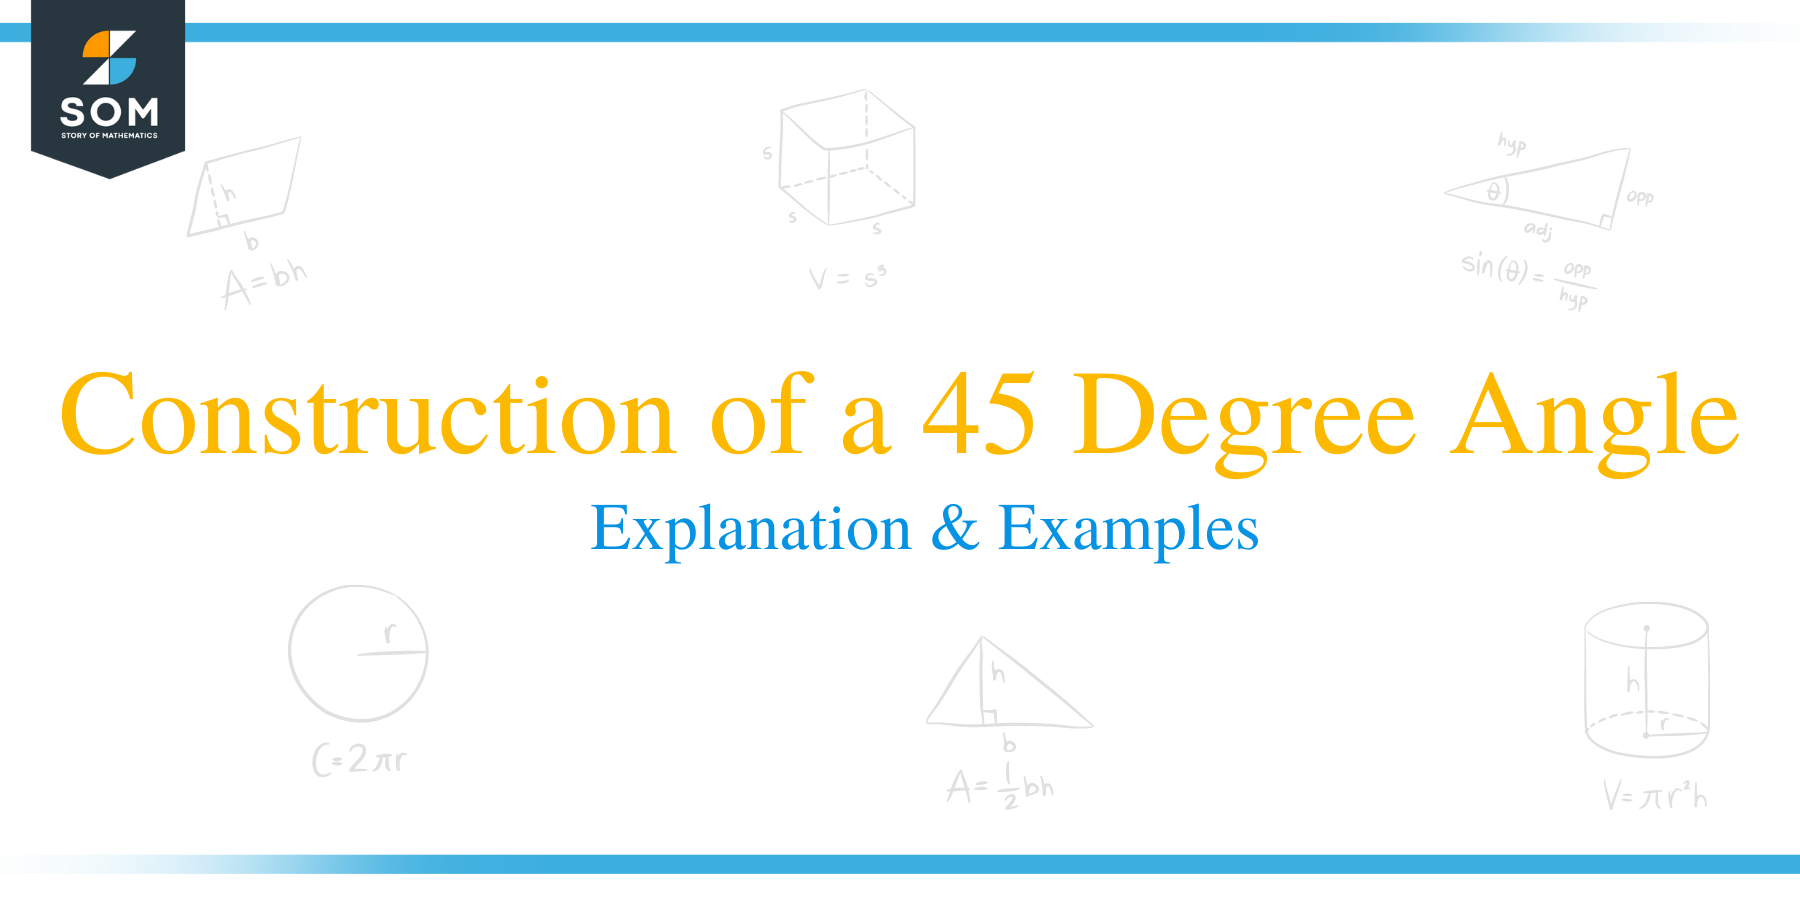 Construction of a 45 Degree Angle